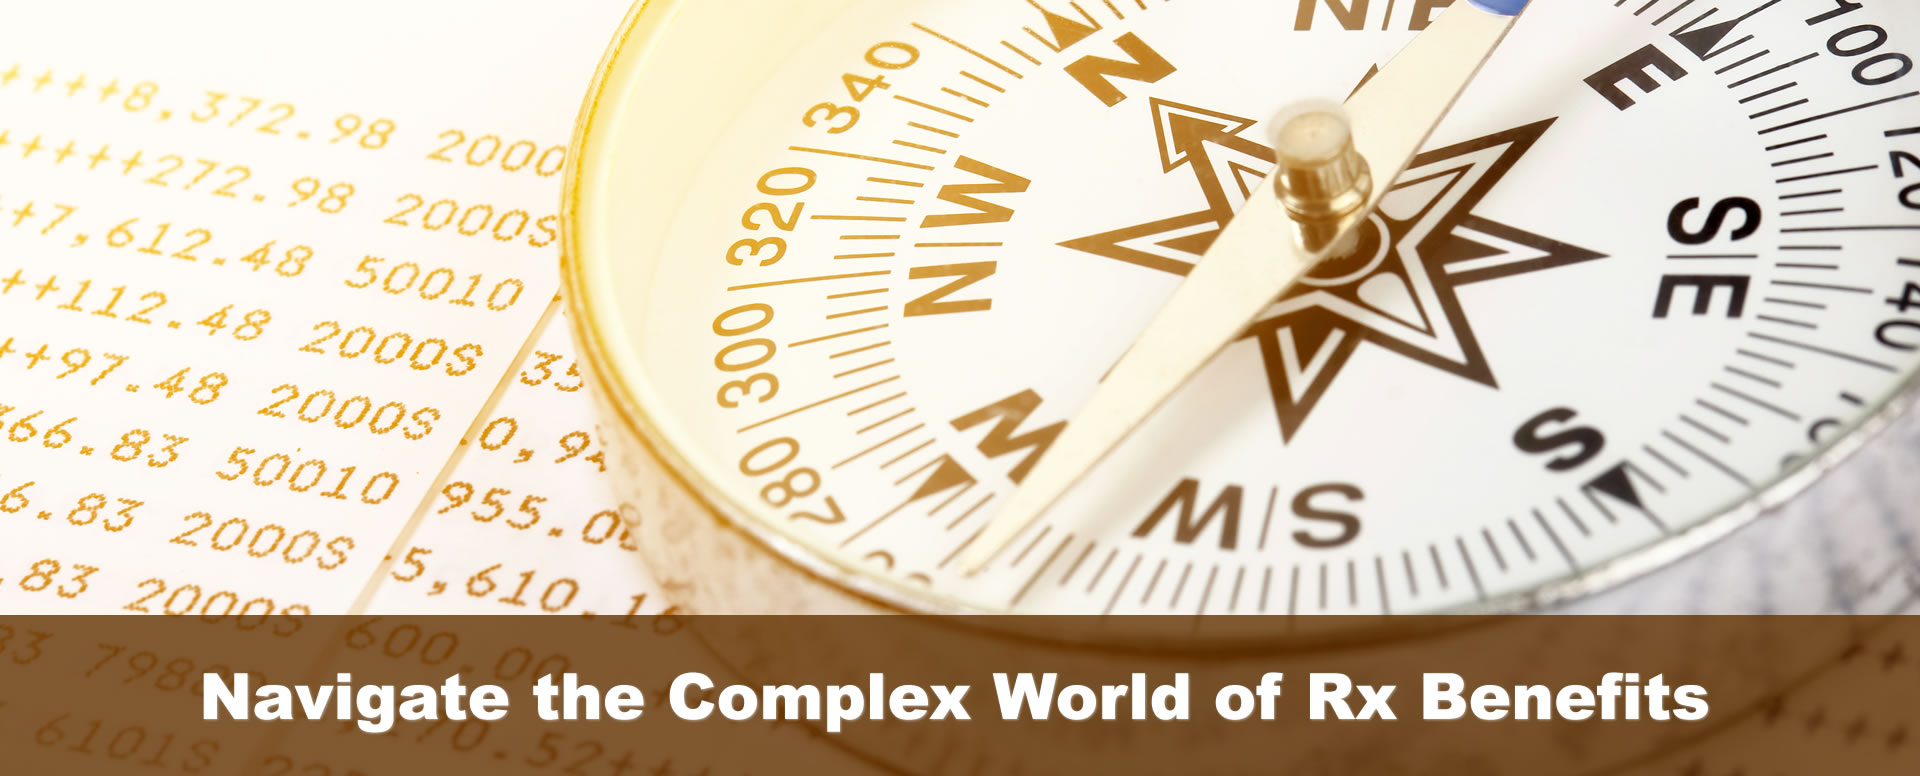 Navigate the Complex World of Rx Benefits